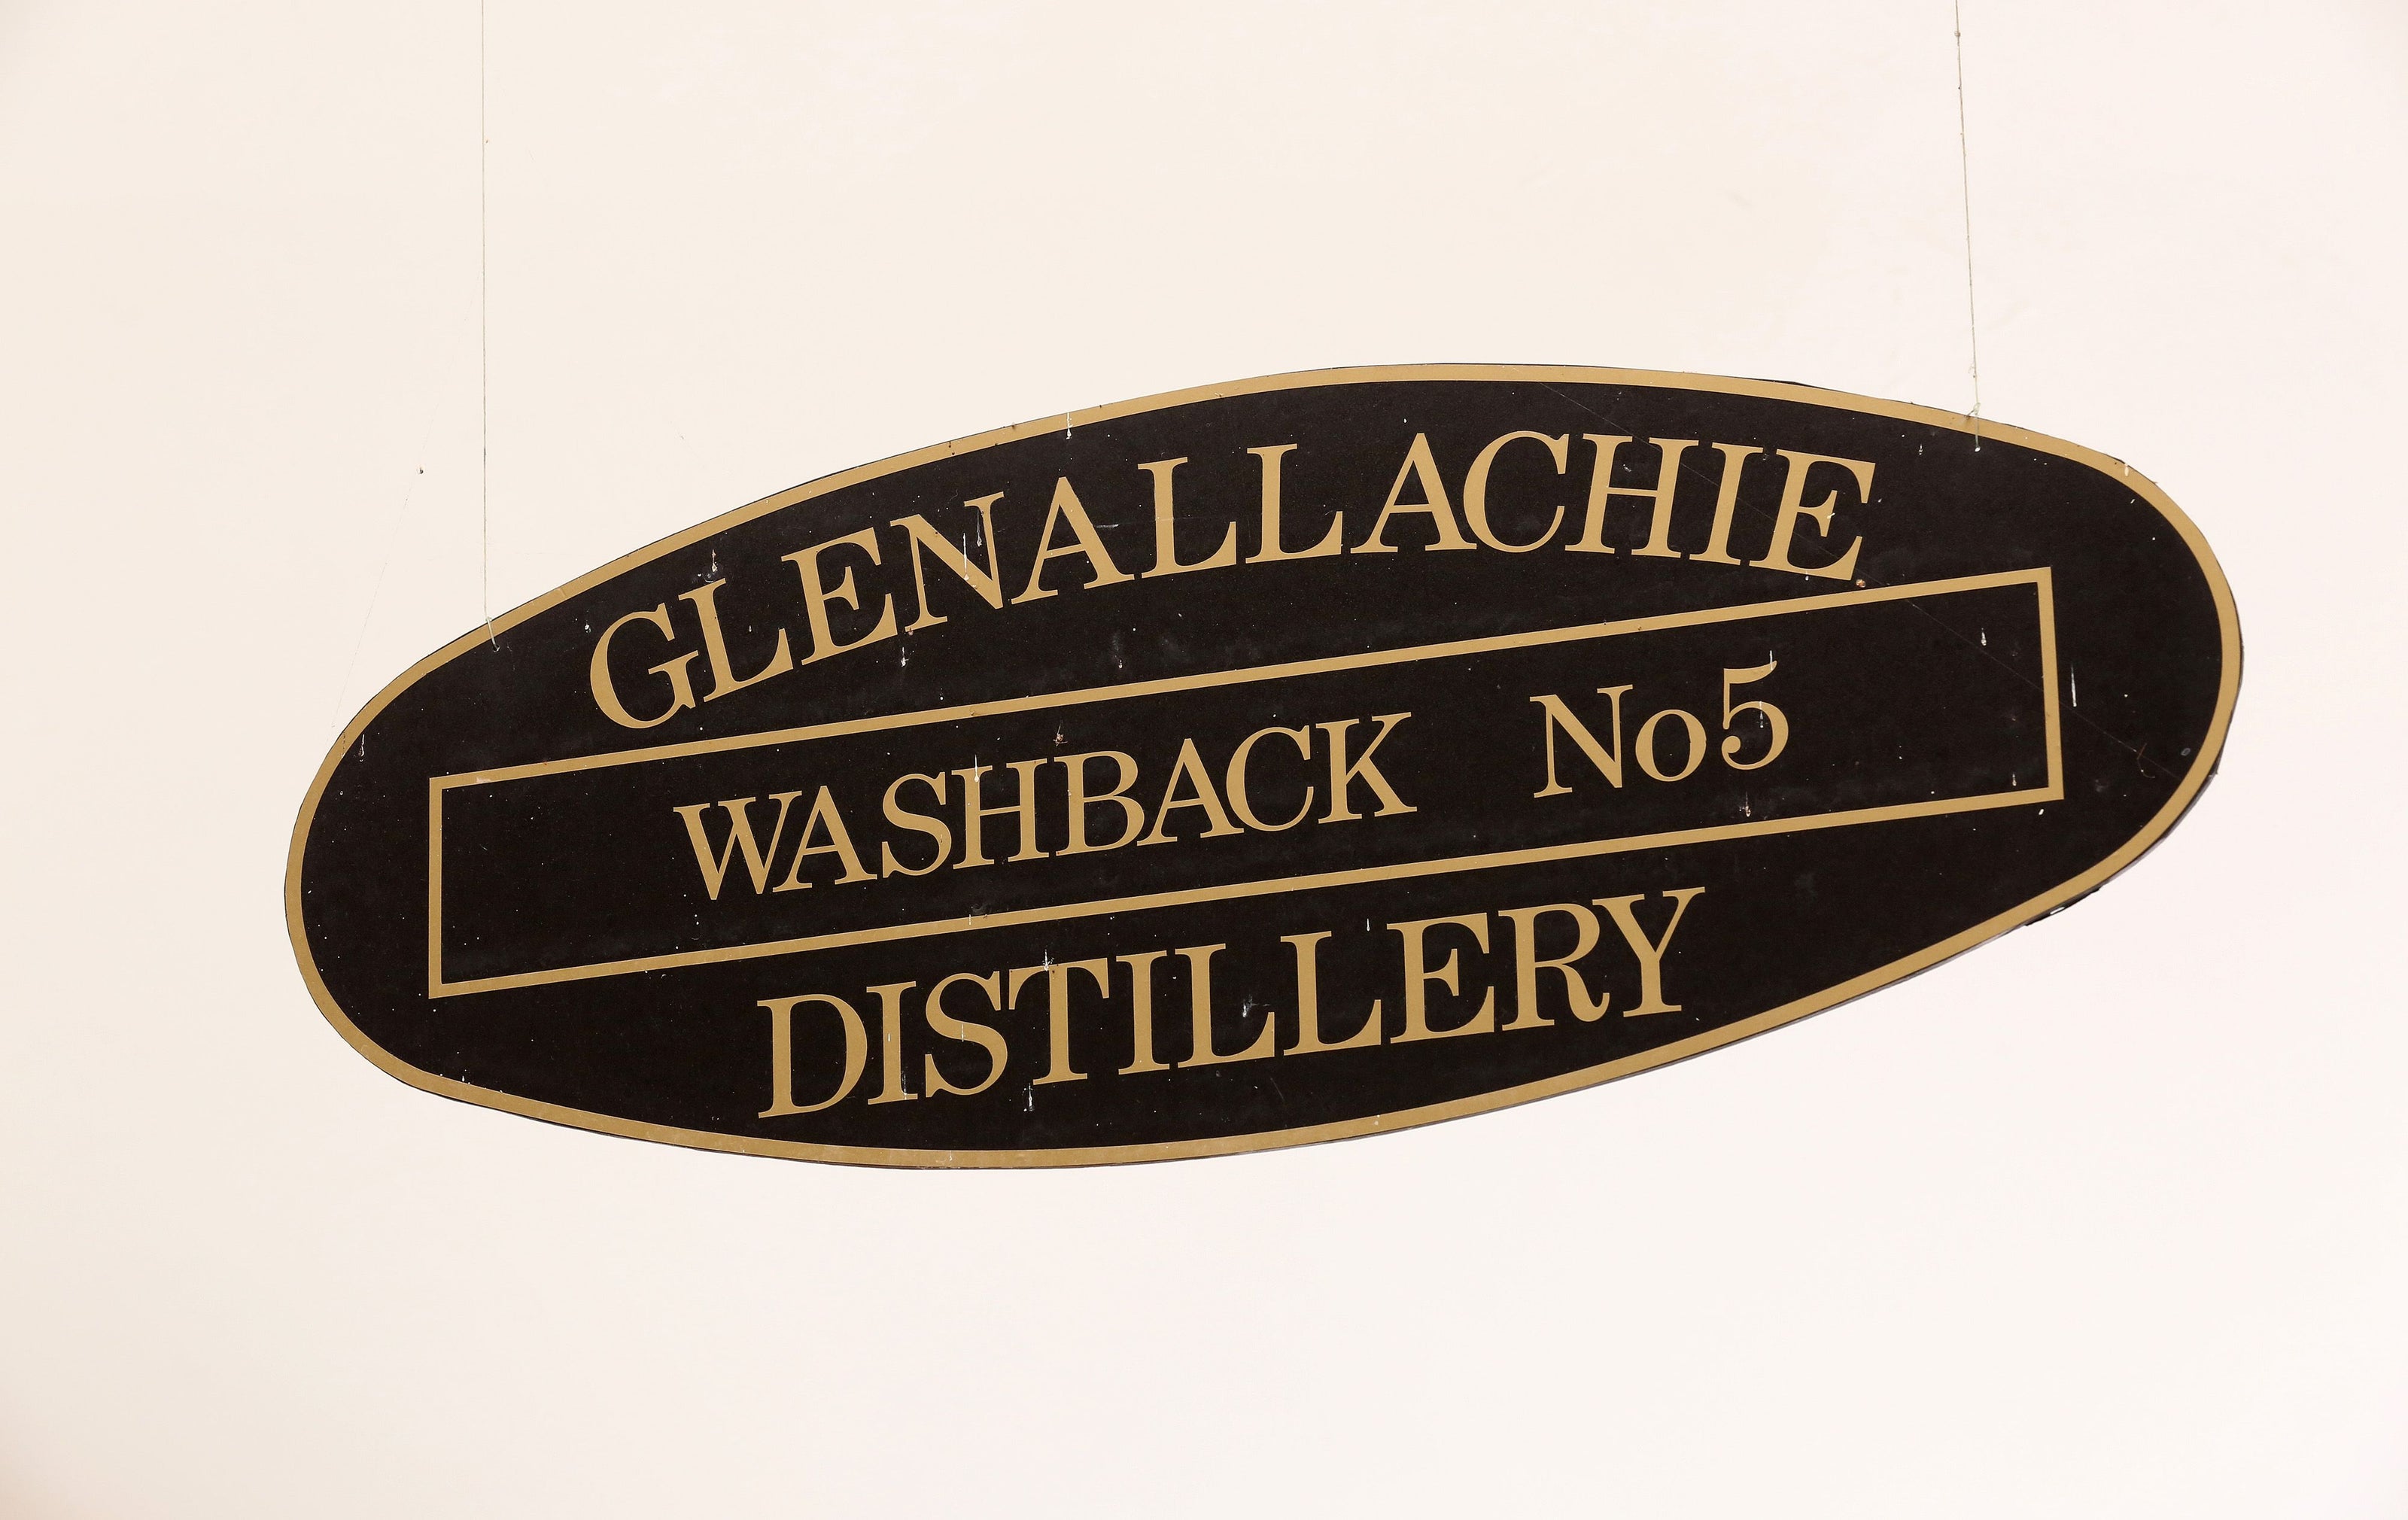 Glenallachie Washback No5 Schild